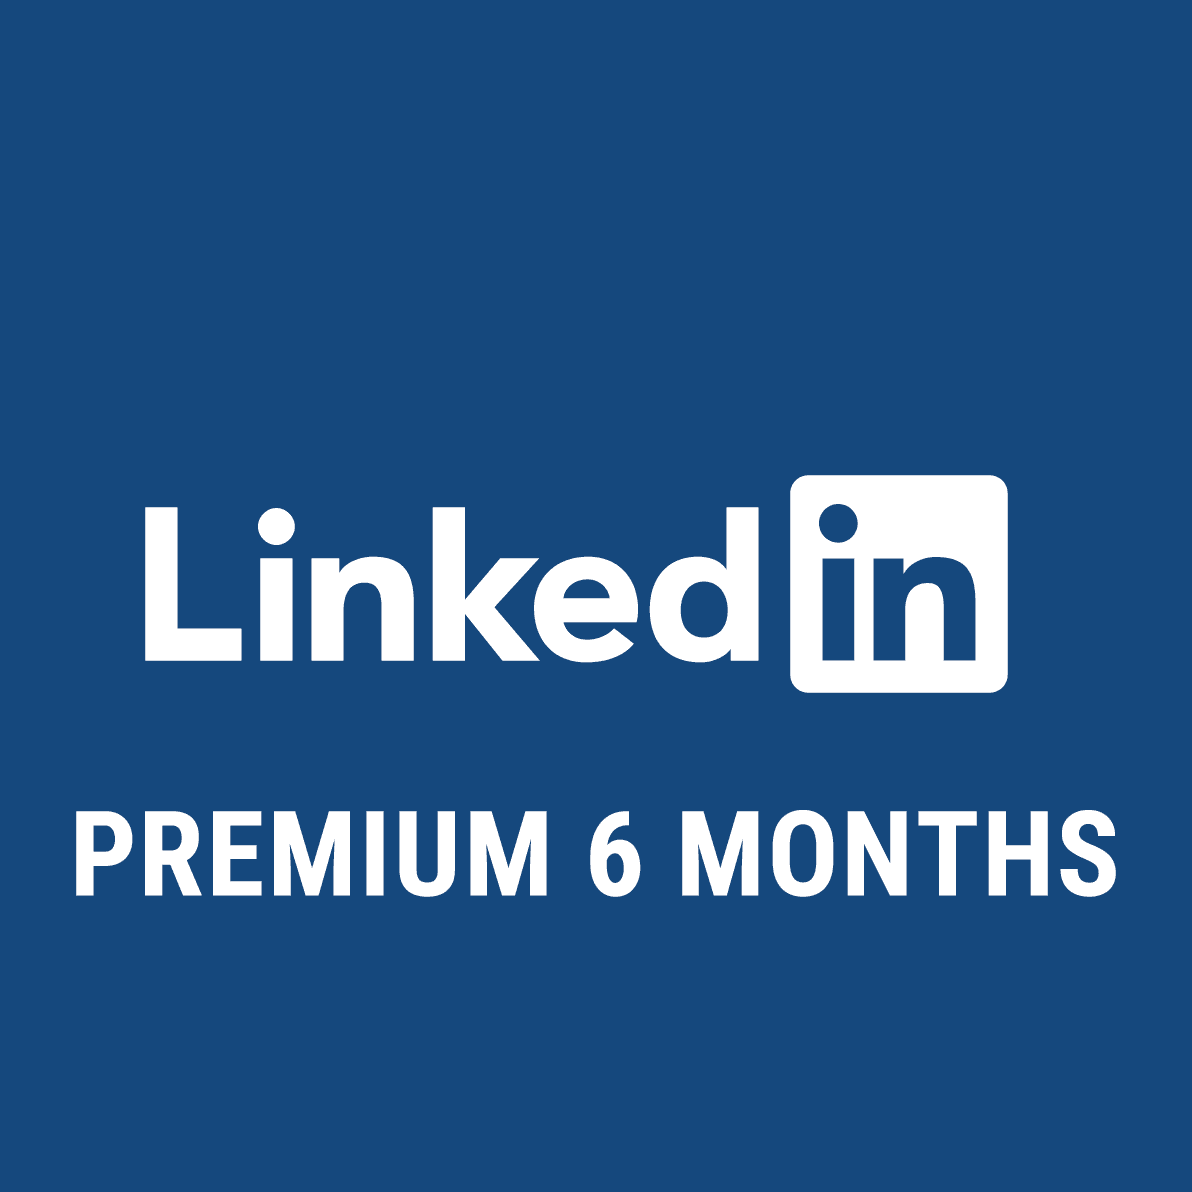 LinkedIn Premium 6 month